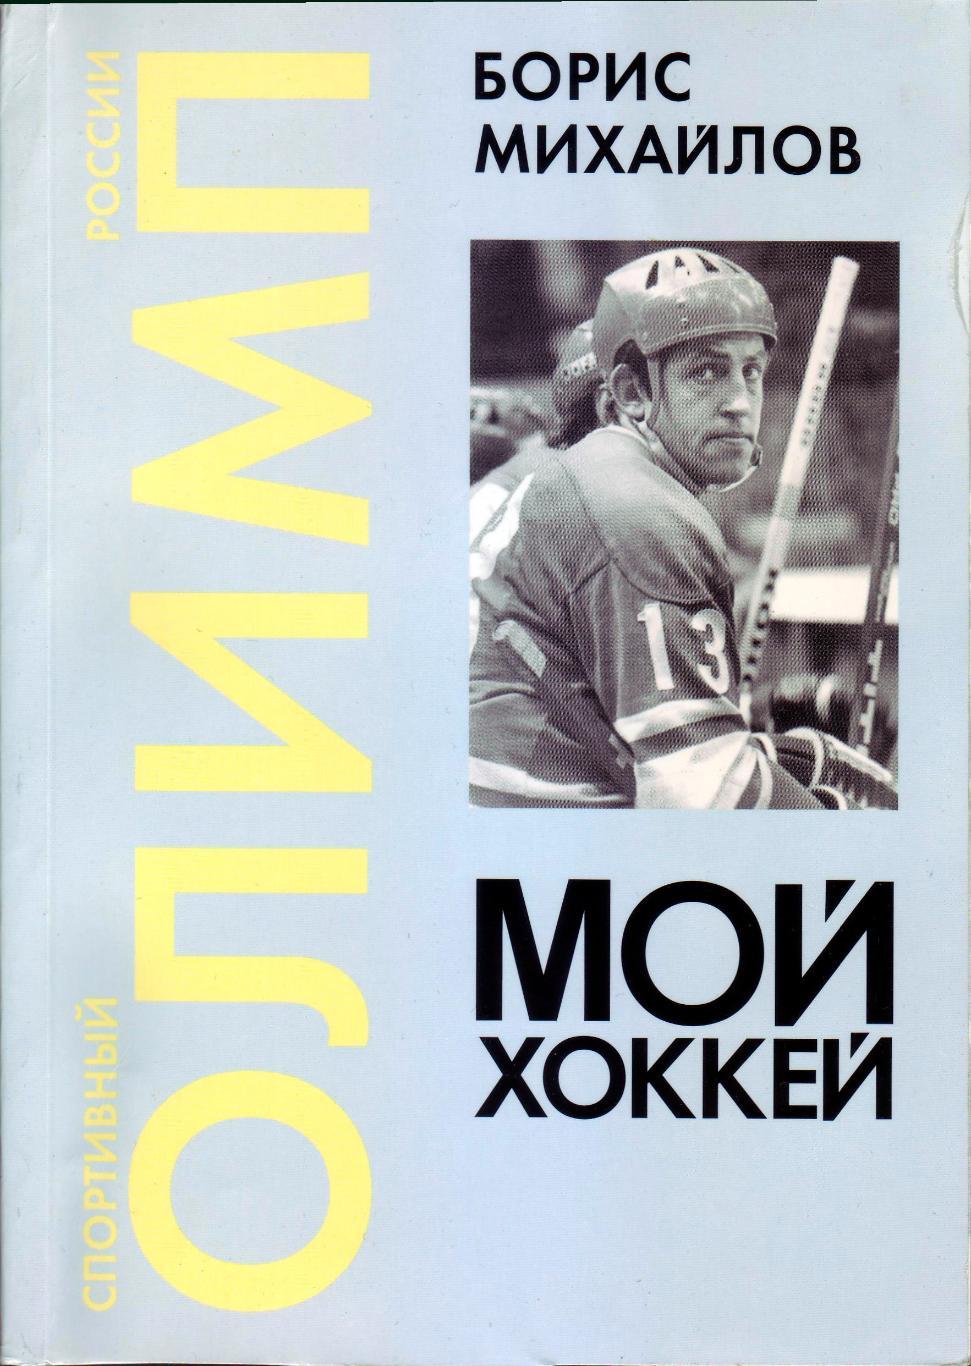 Борис Михайлов. Мой хоккей